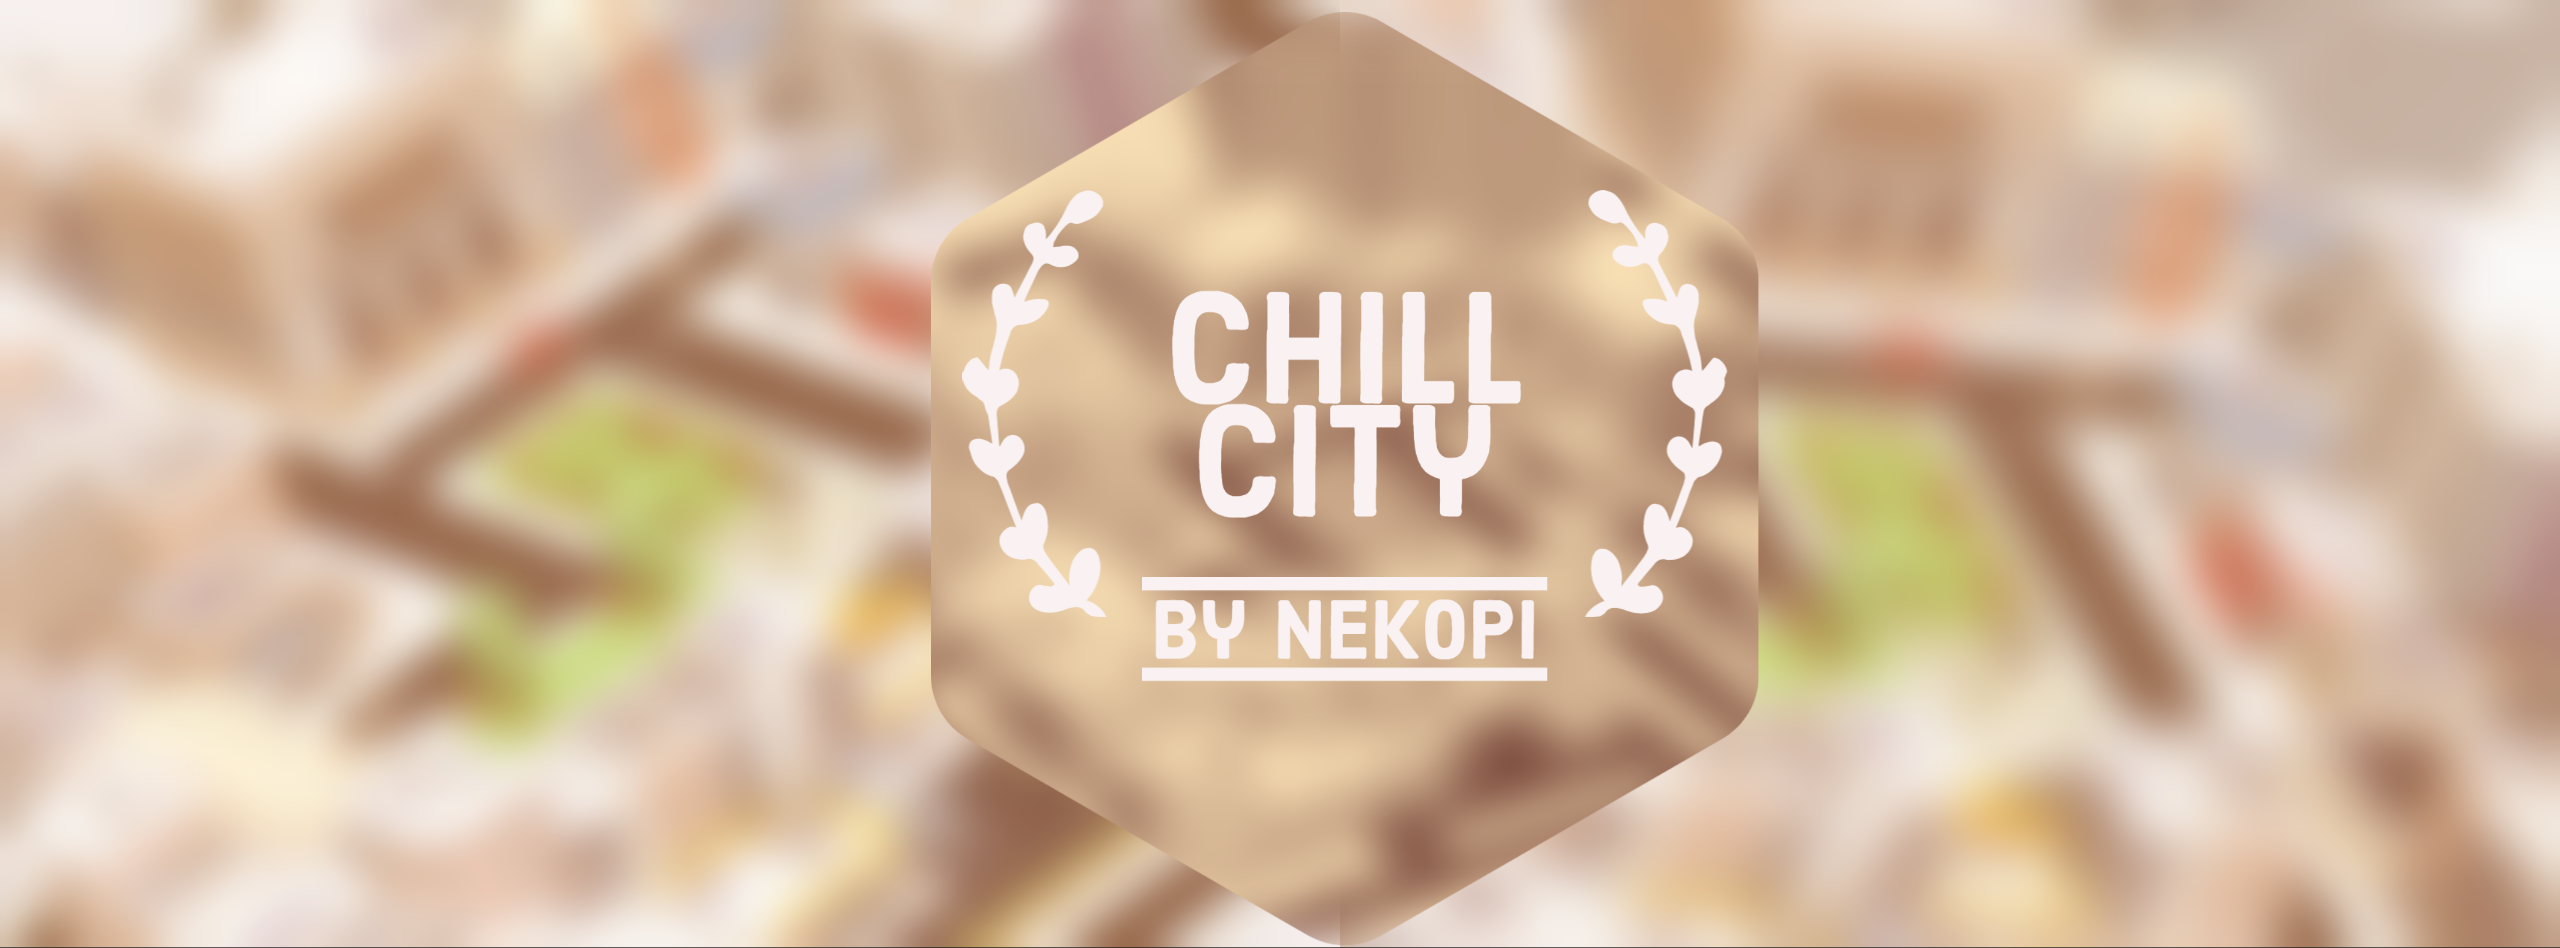 Chill City